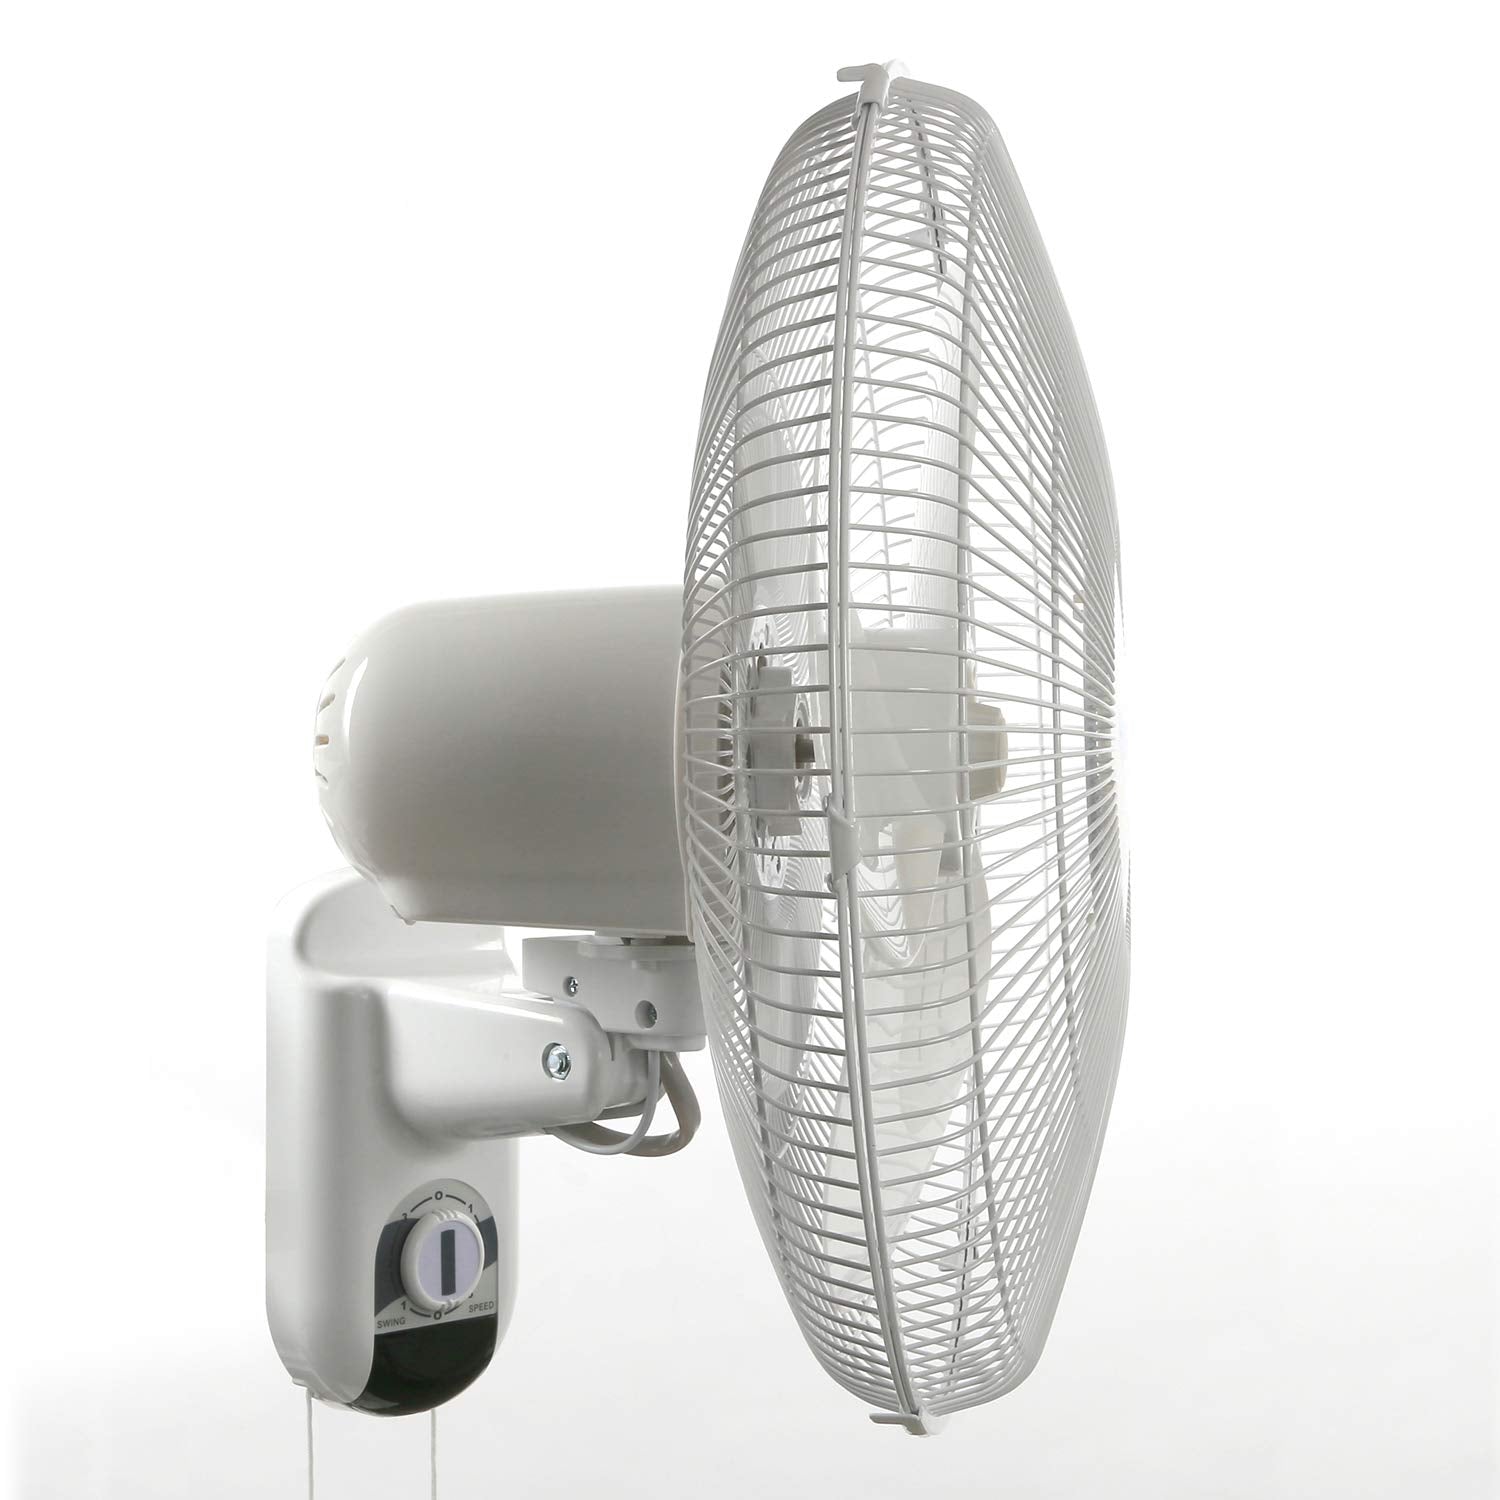 REBOX Hurricane® Classic Oscillating Wall Mount Fan 16" - HGC736503_RE